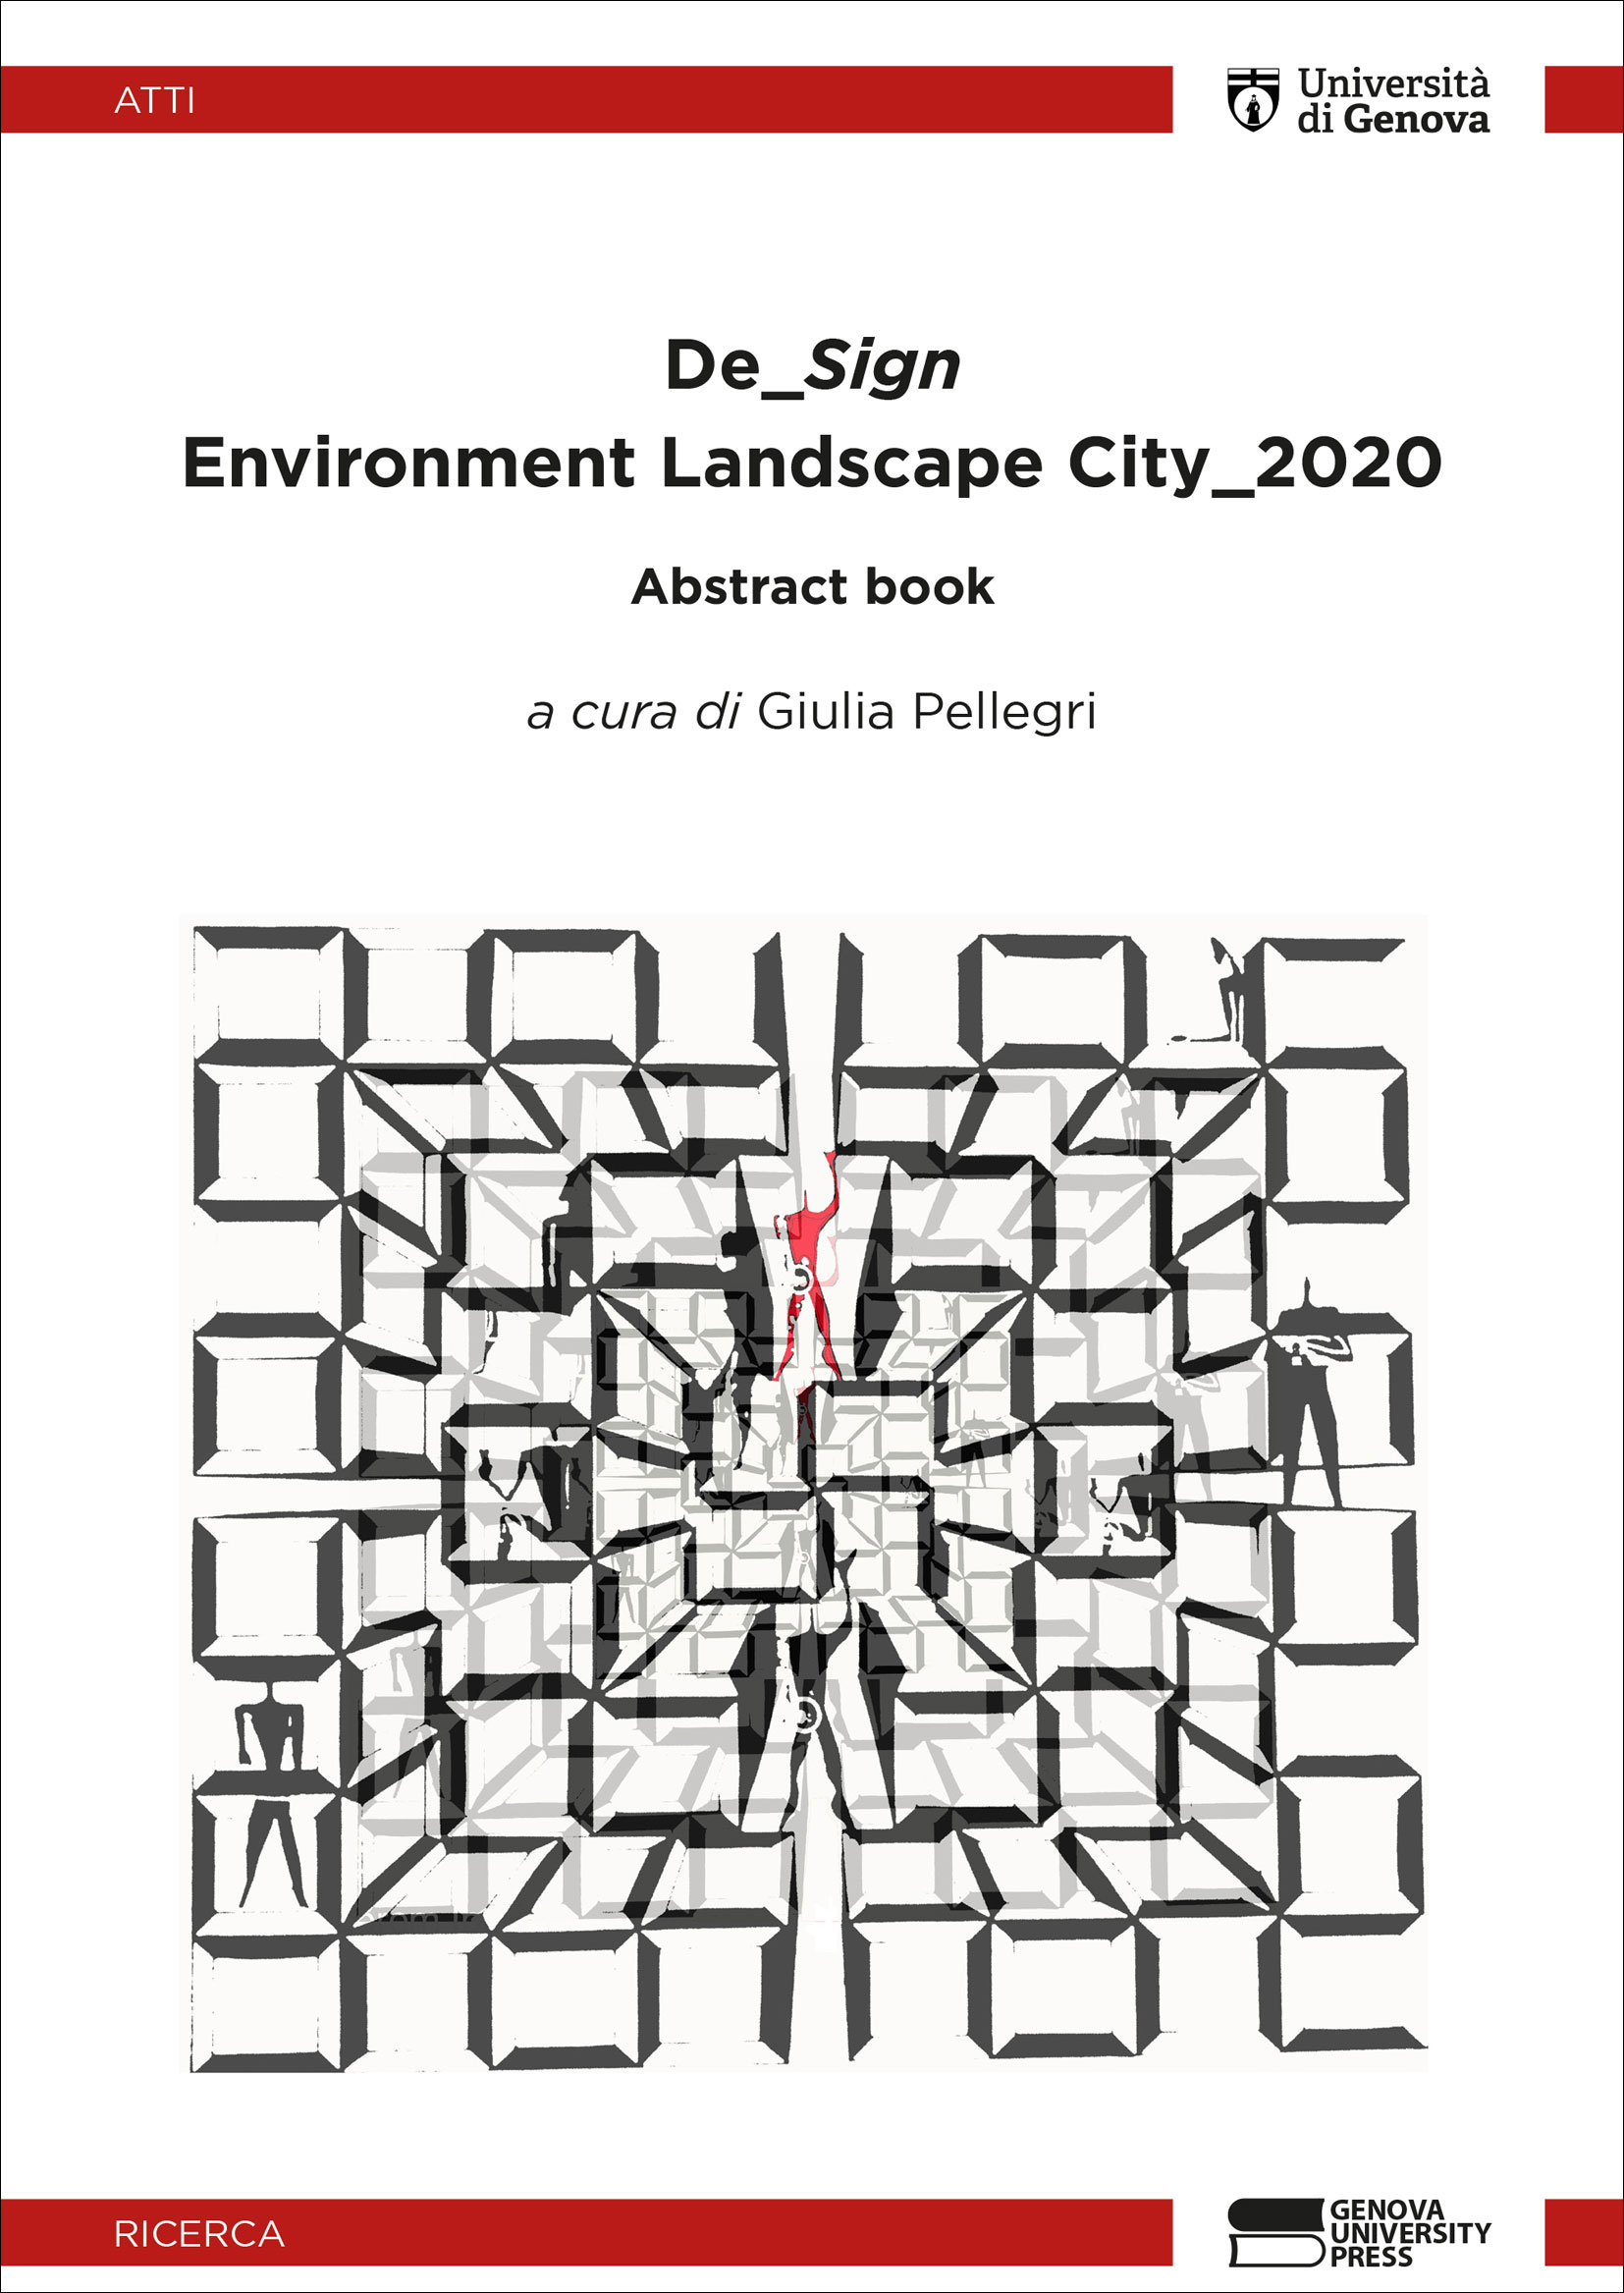 De_Sign Environment Landscape City_2020 - Abstract book